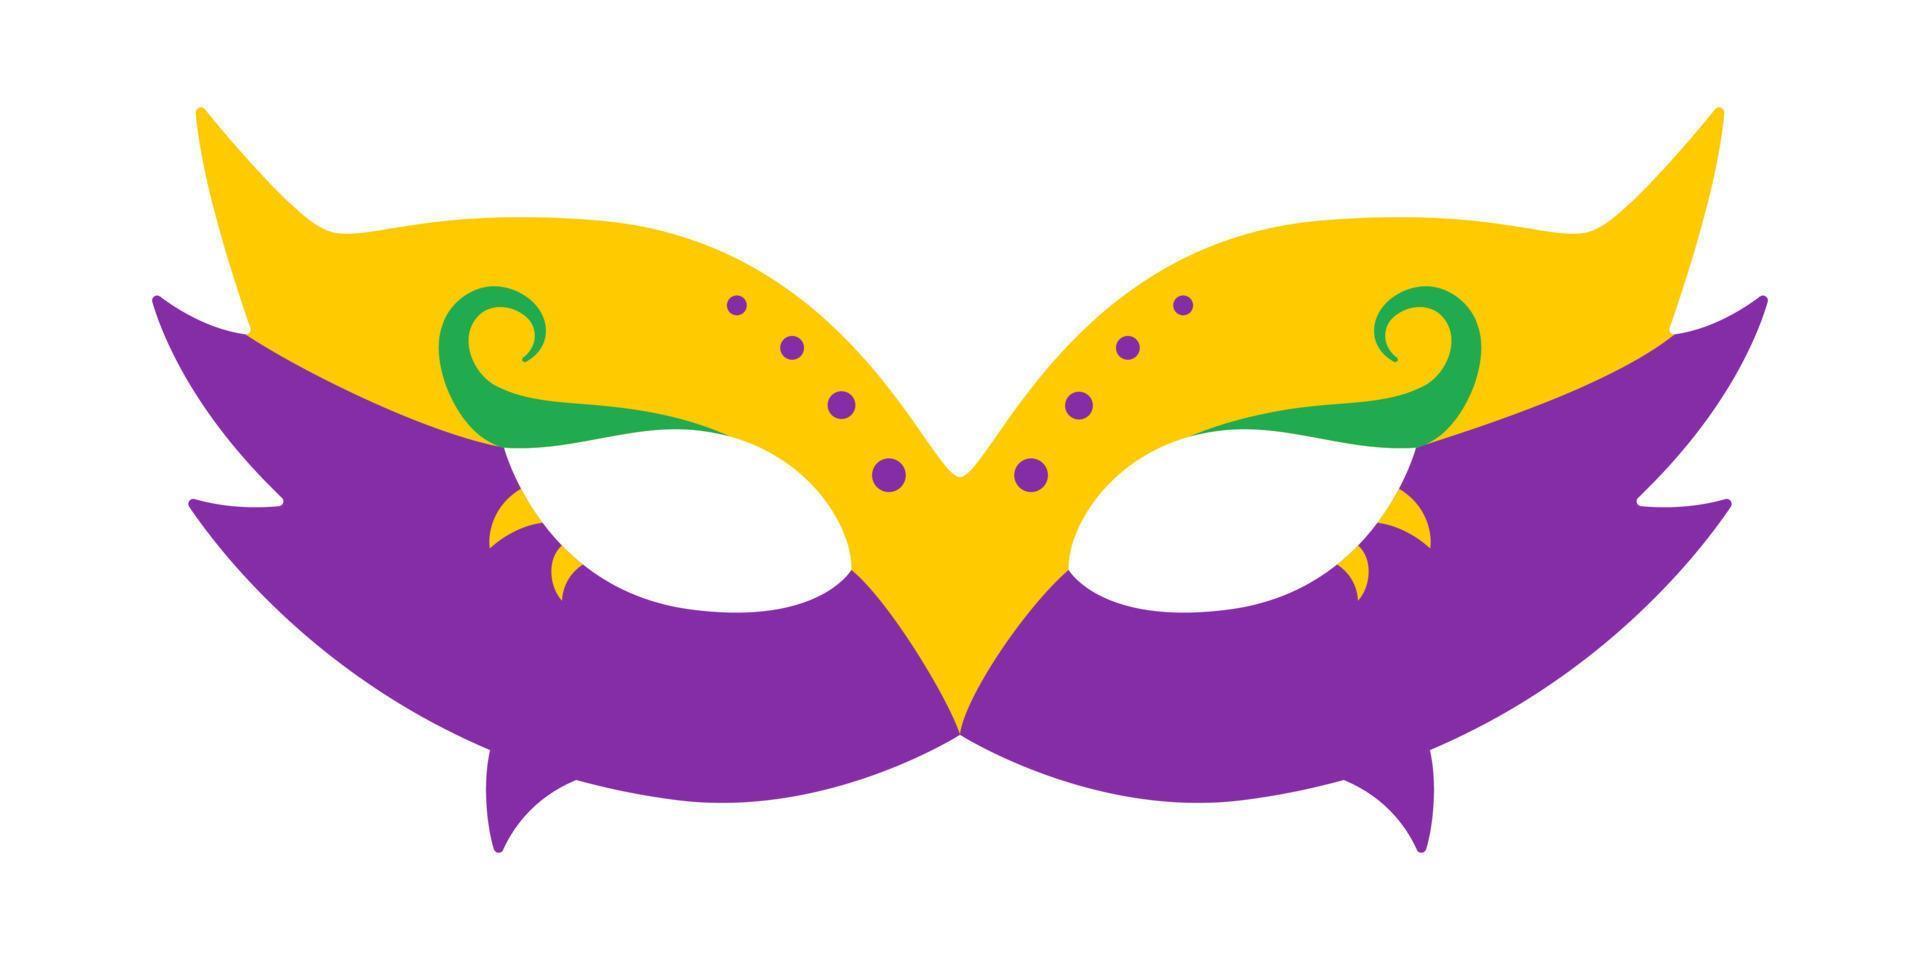 Vektor-Karnevalsmaske. Karnevalsmaske mit Punkten. Design für Karneval am fetten Dienstag. bunte maskeradeillustration. Karnevalsmaske für traditionelle Feiertage oder Feste. vektor